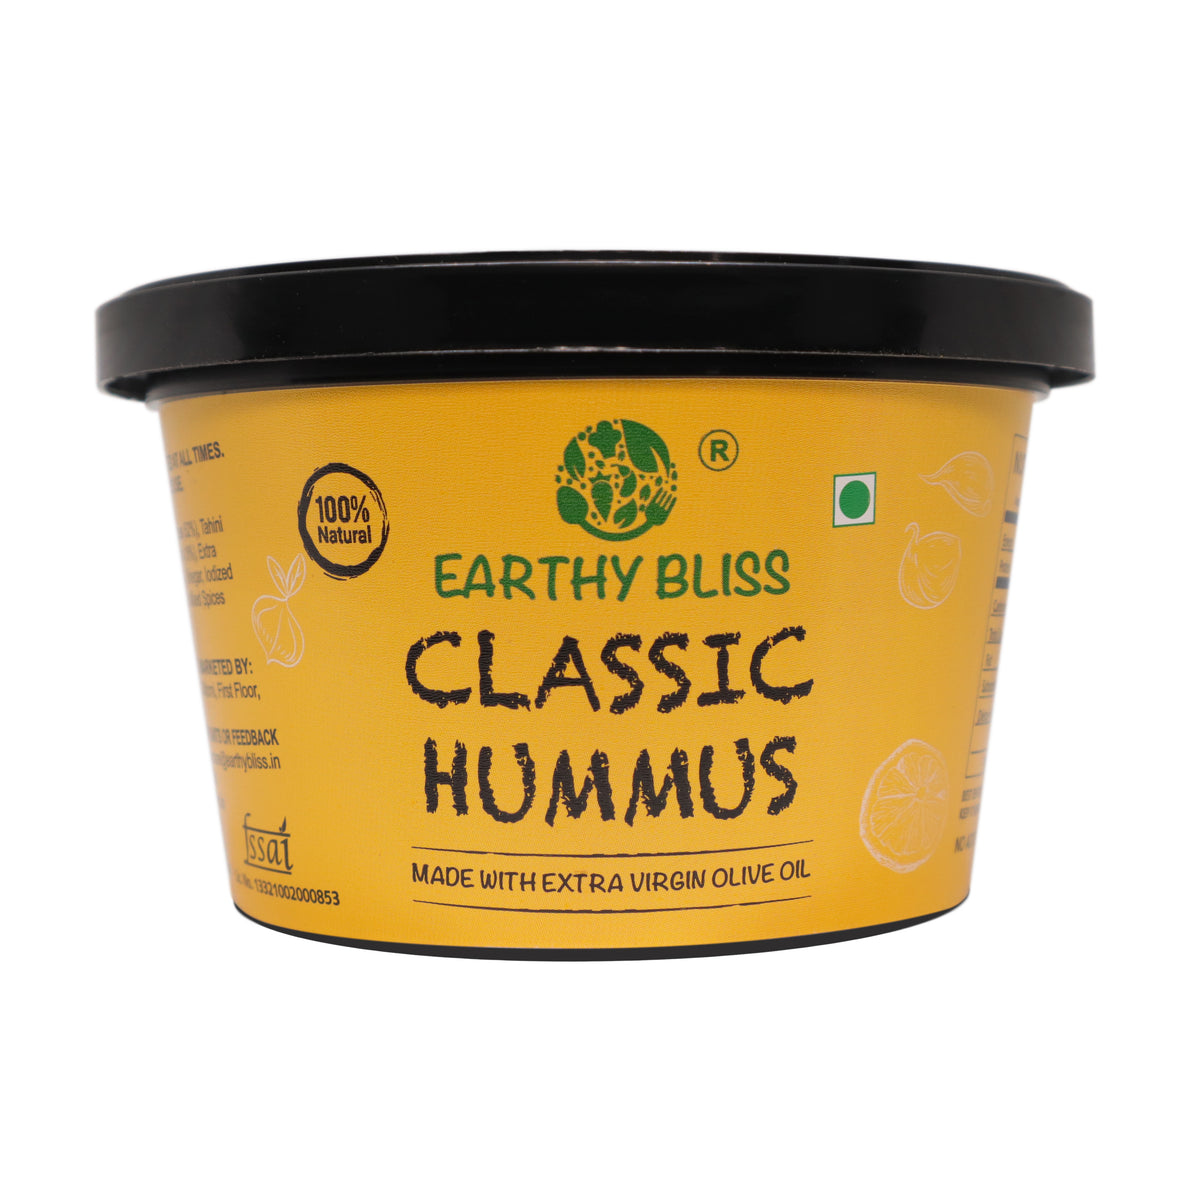 Classic Hummus - Earthy Bliss